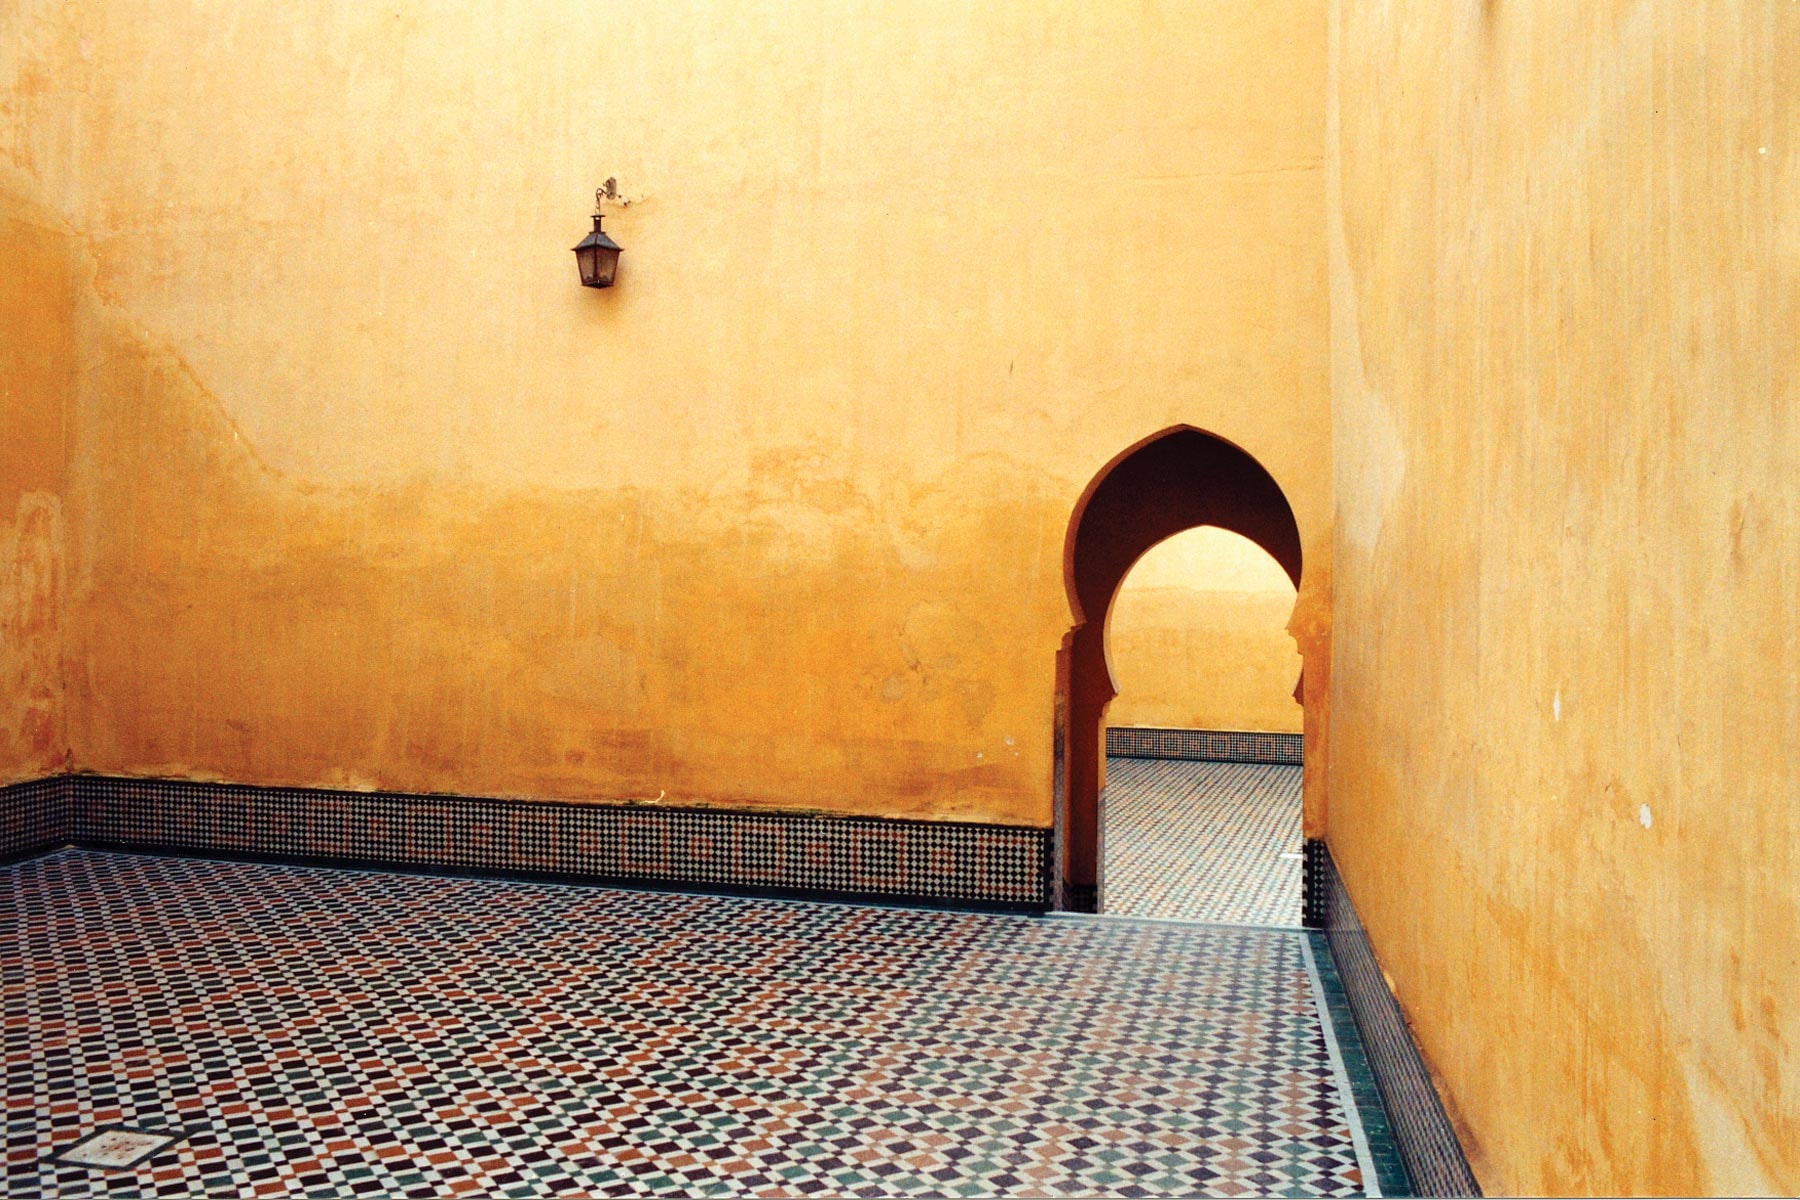 Morocco room